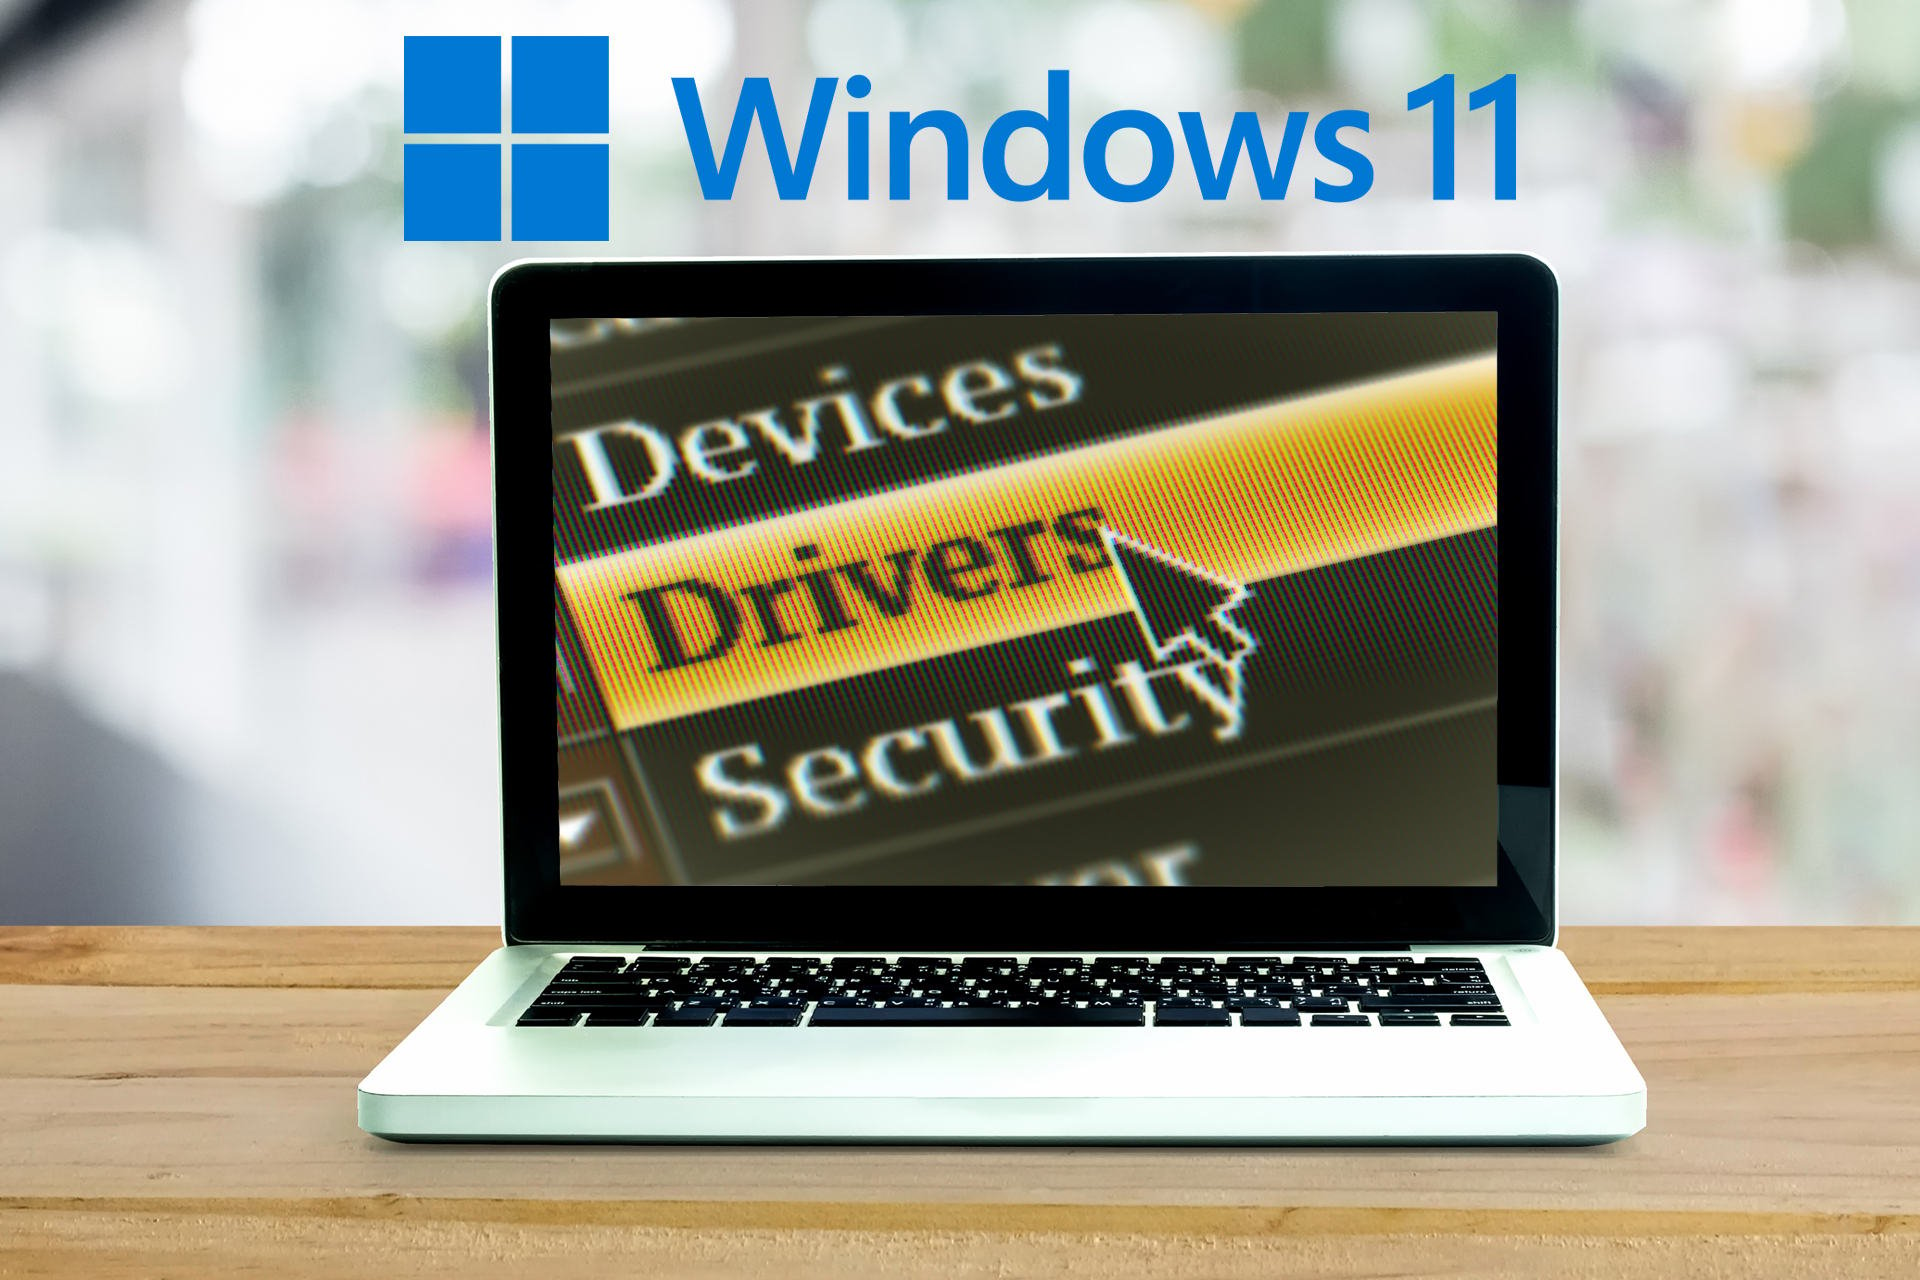 Update drivers on Windows 11